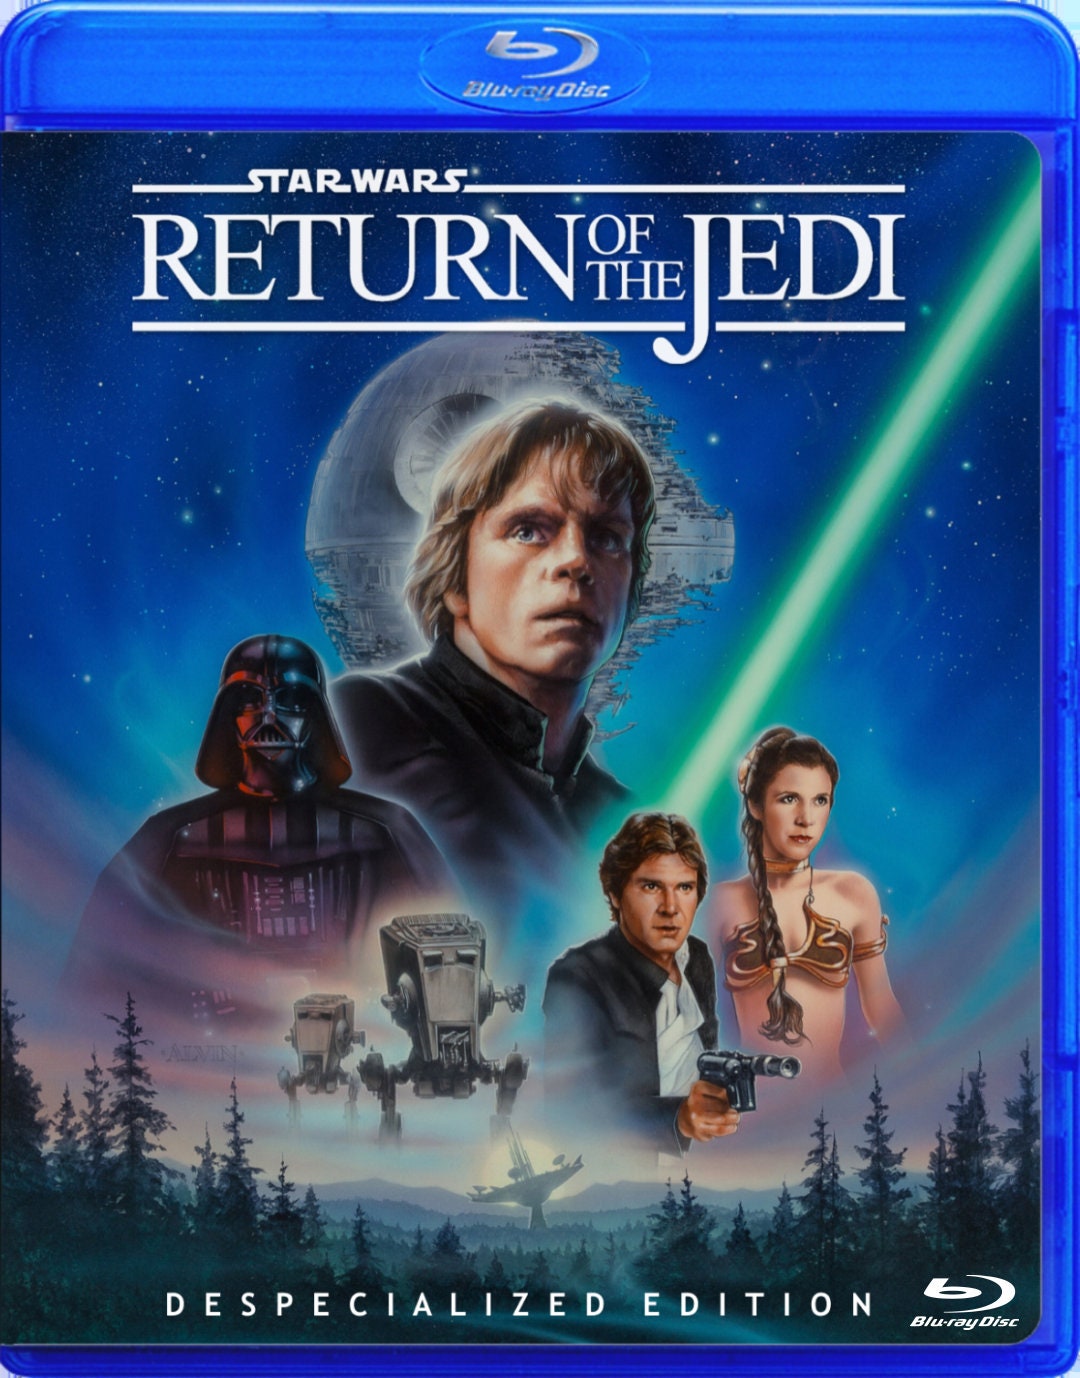 Star Wars 1977 Despecialized Edition Custom Blu-ray Cover no Blu-ray Disc 